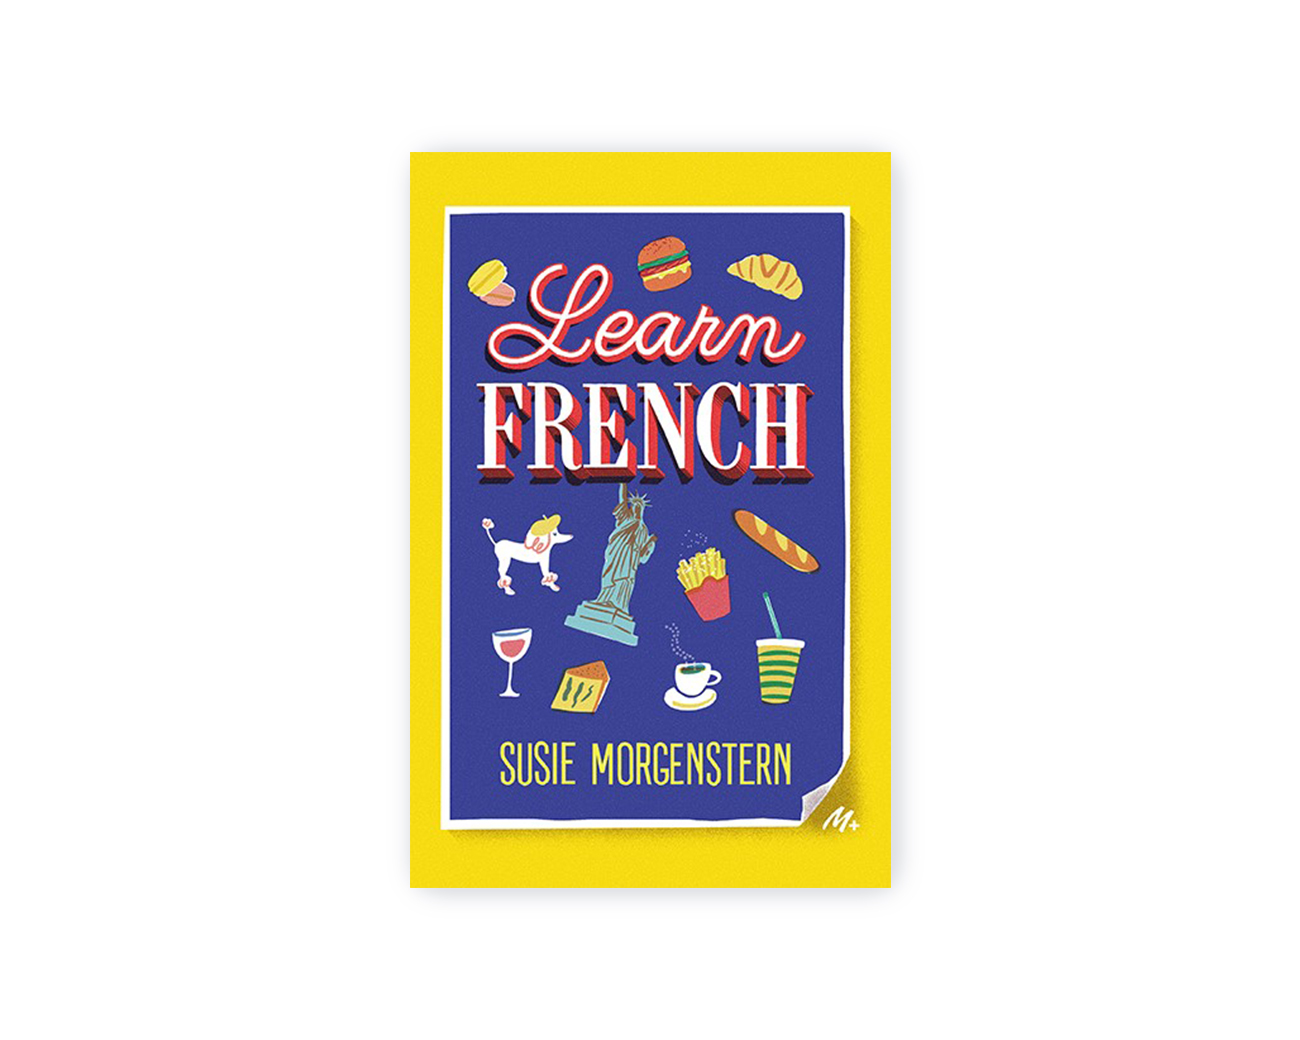 Livre "Learn French" de Susie Morgenstern